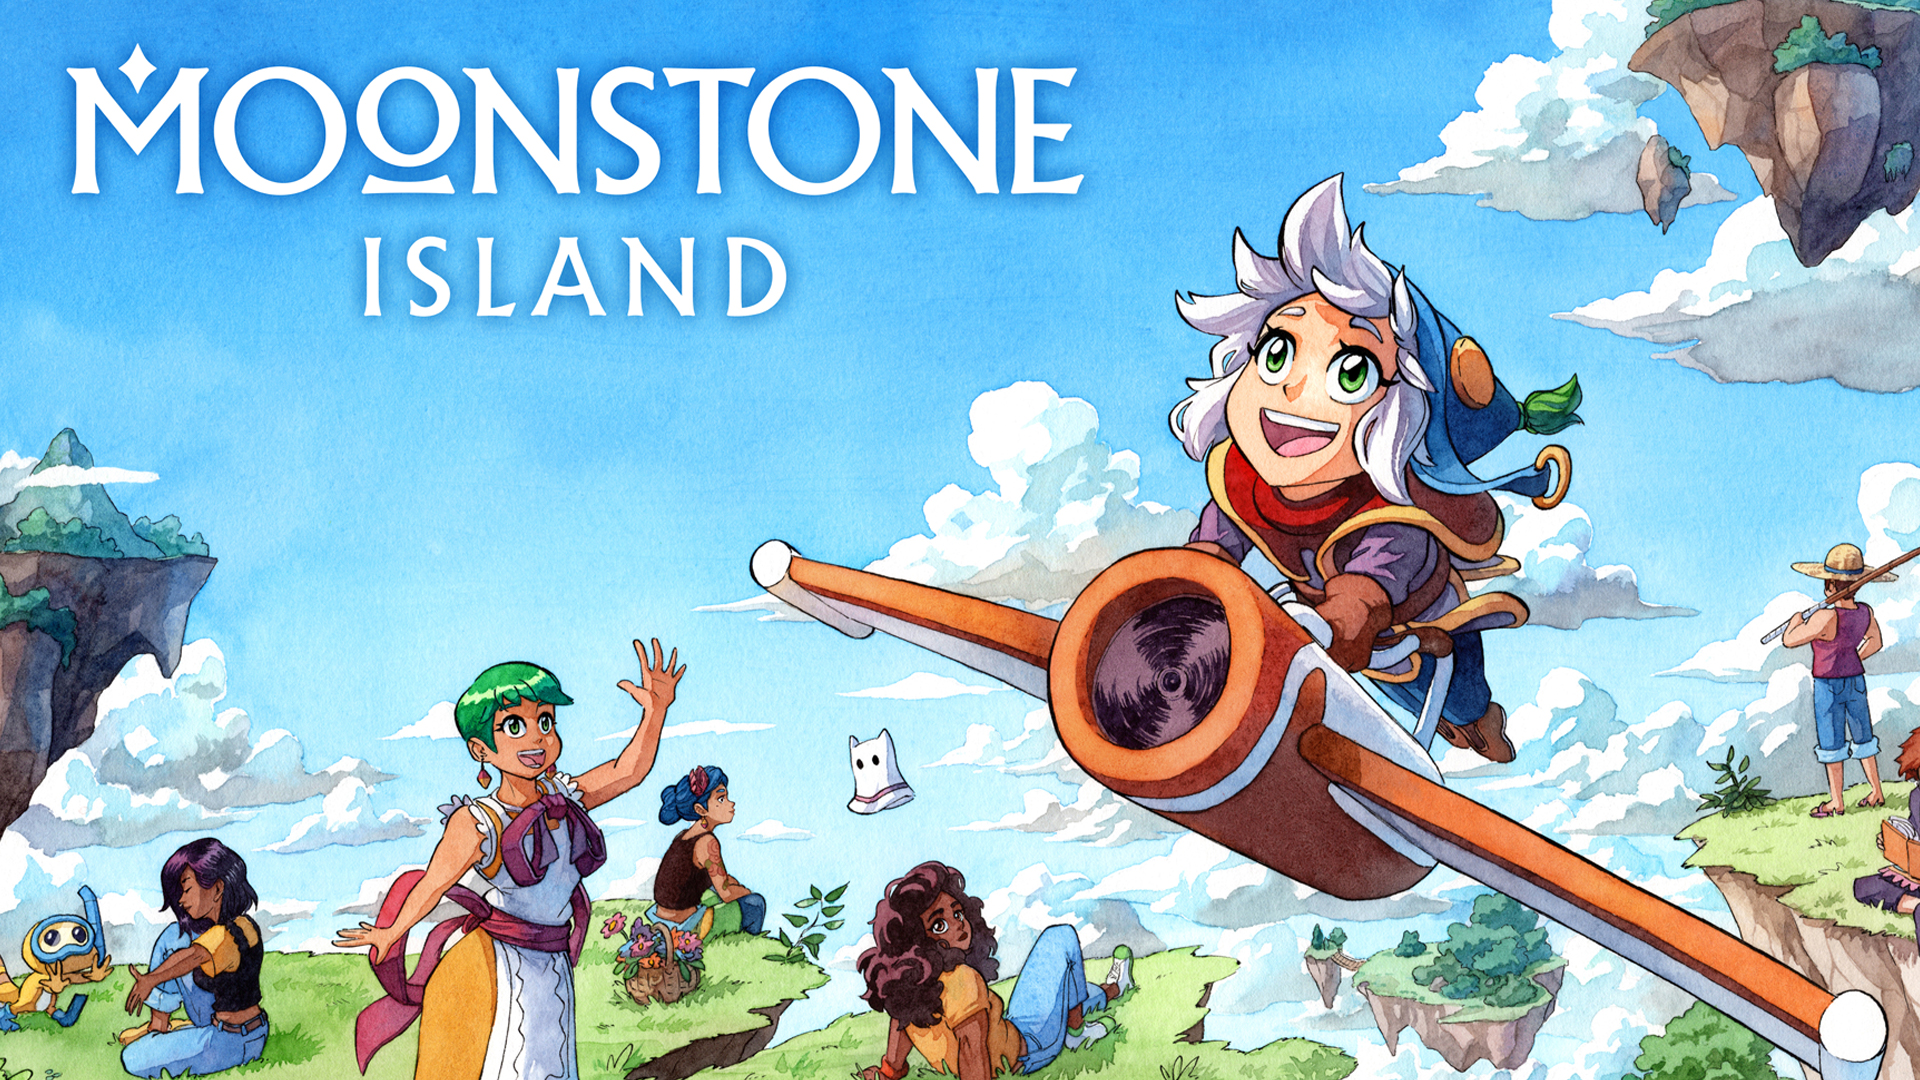 Sandbox life simulator Moonstone Island is now available on PC